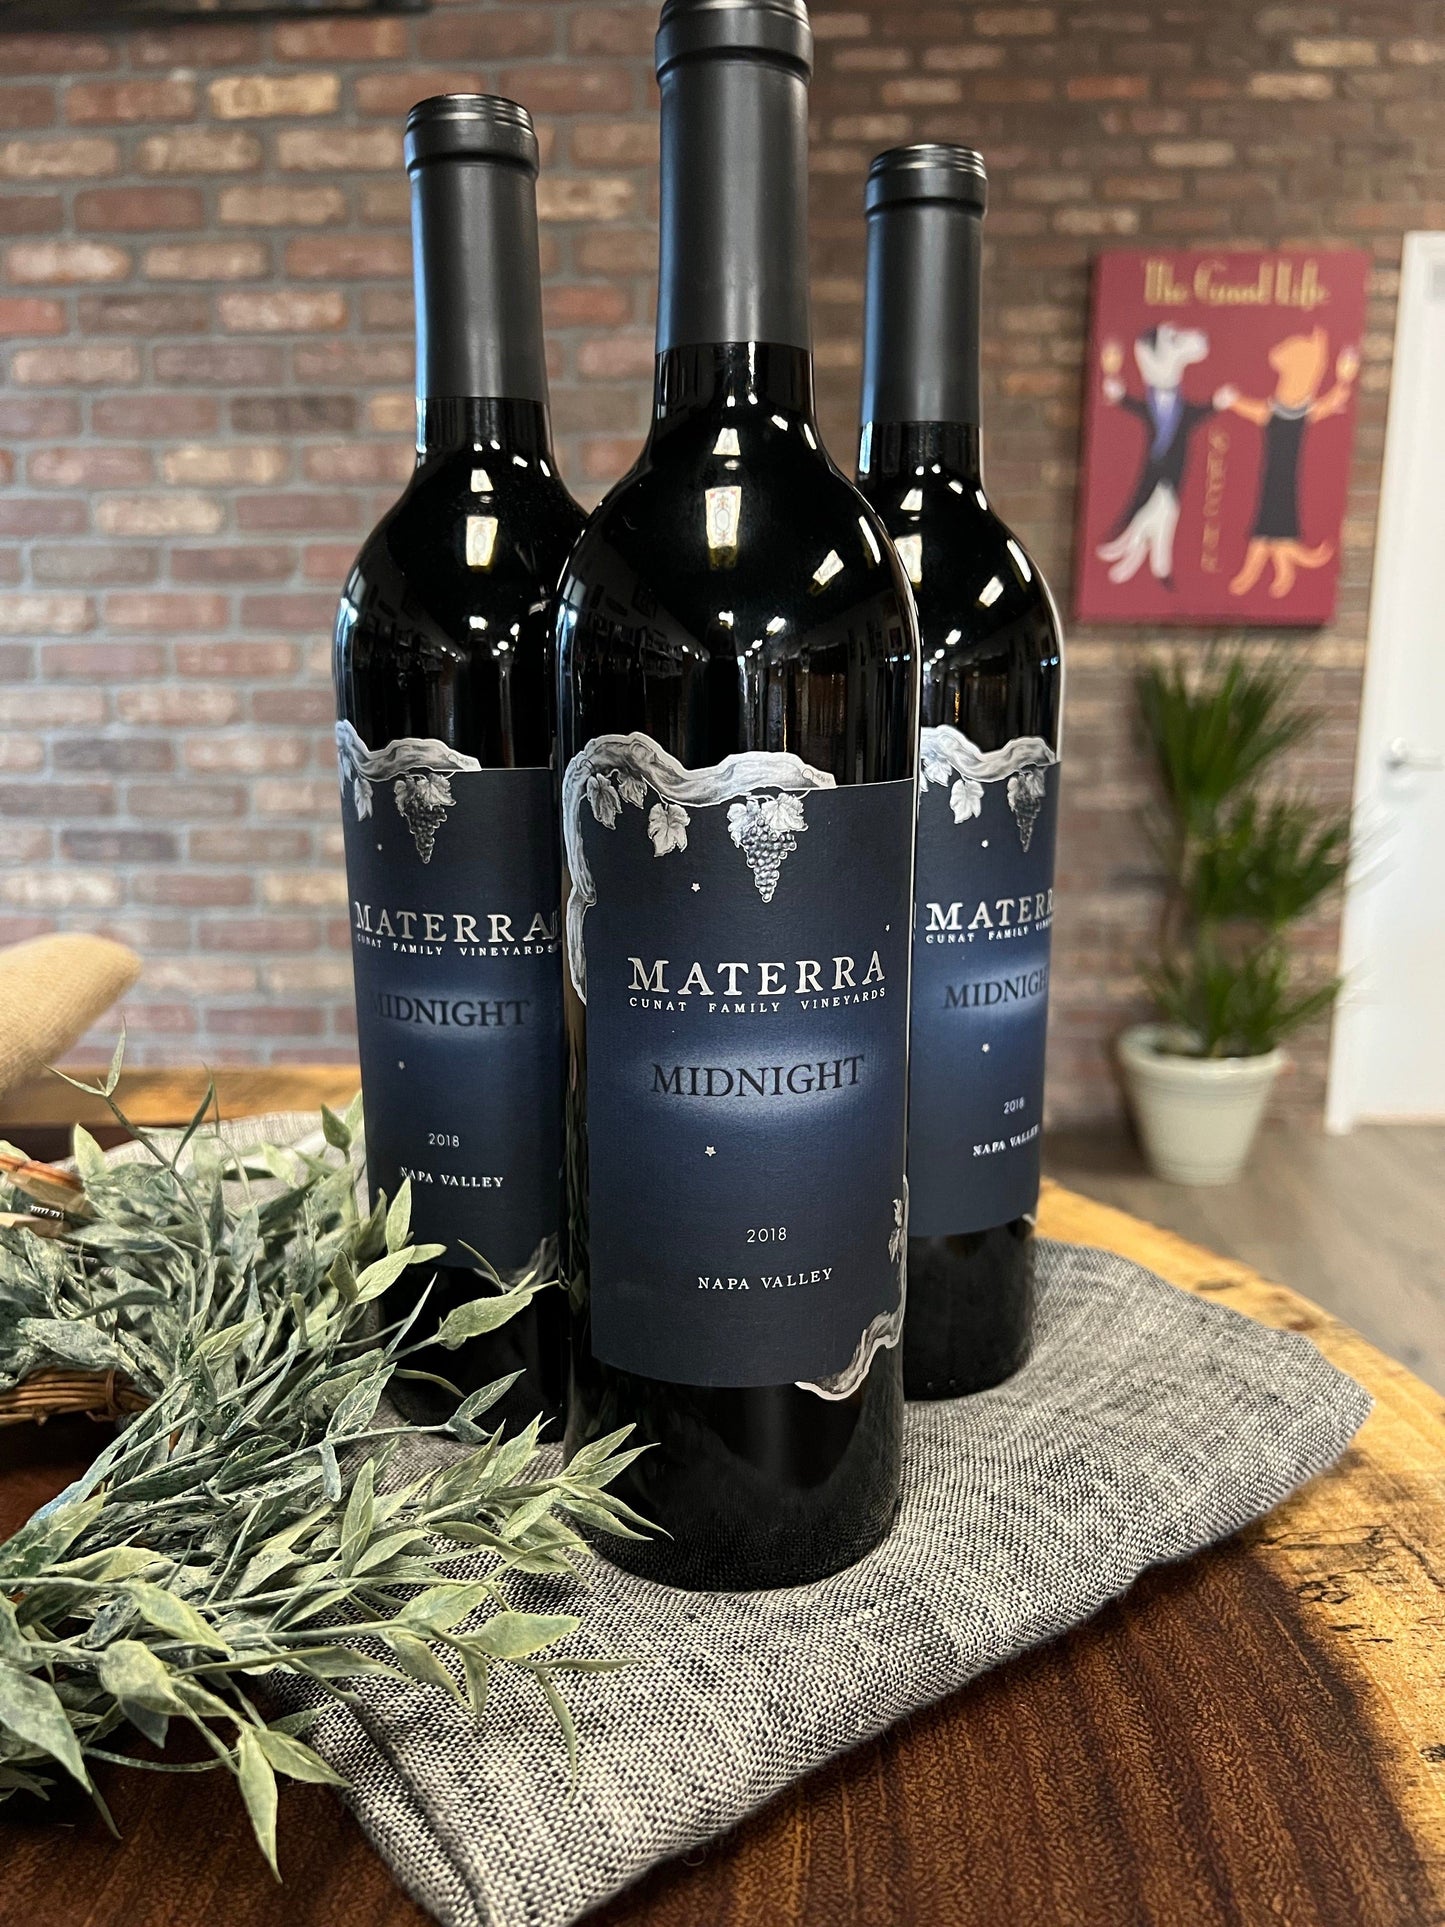 Materra Midnight by Chelsea Barrett (2018) - Your Wine Stop   -   Denver, NC